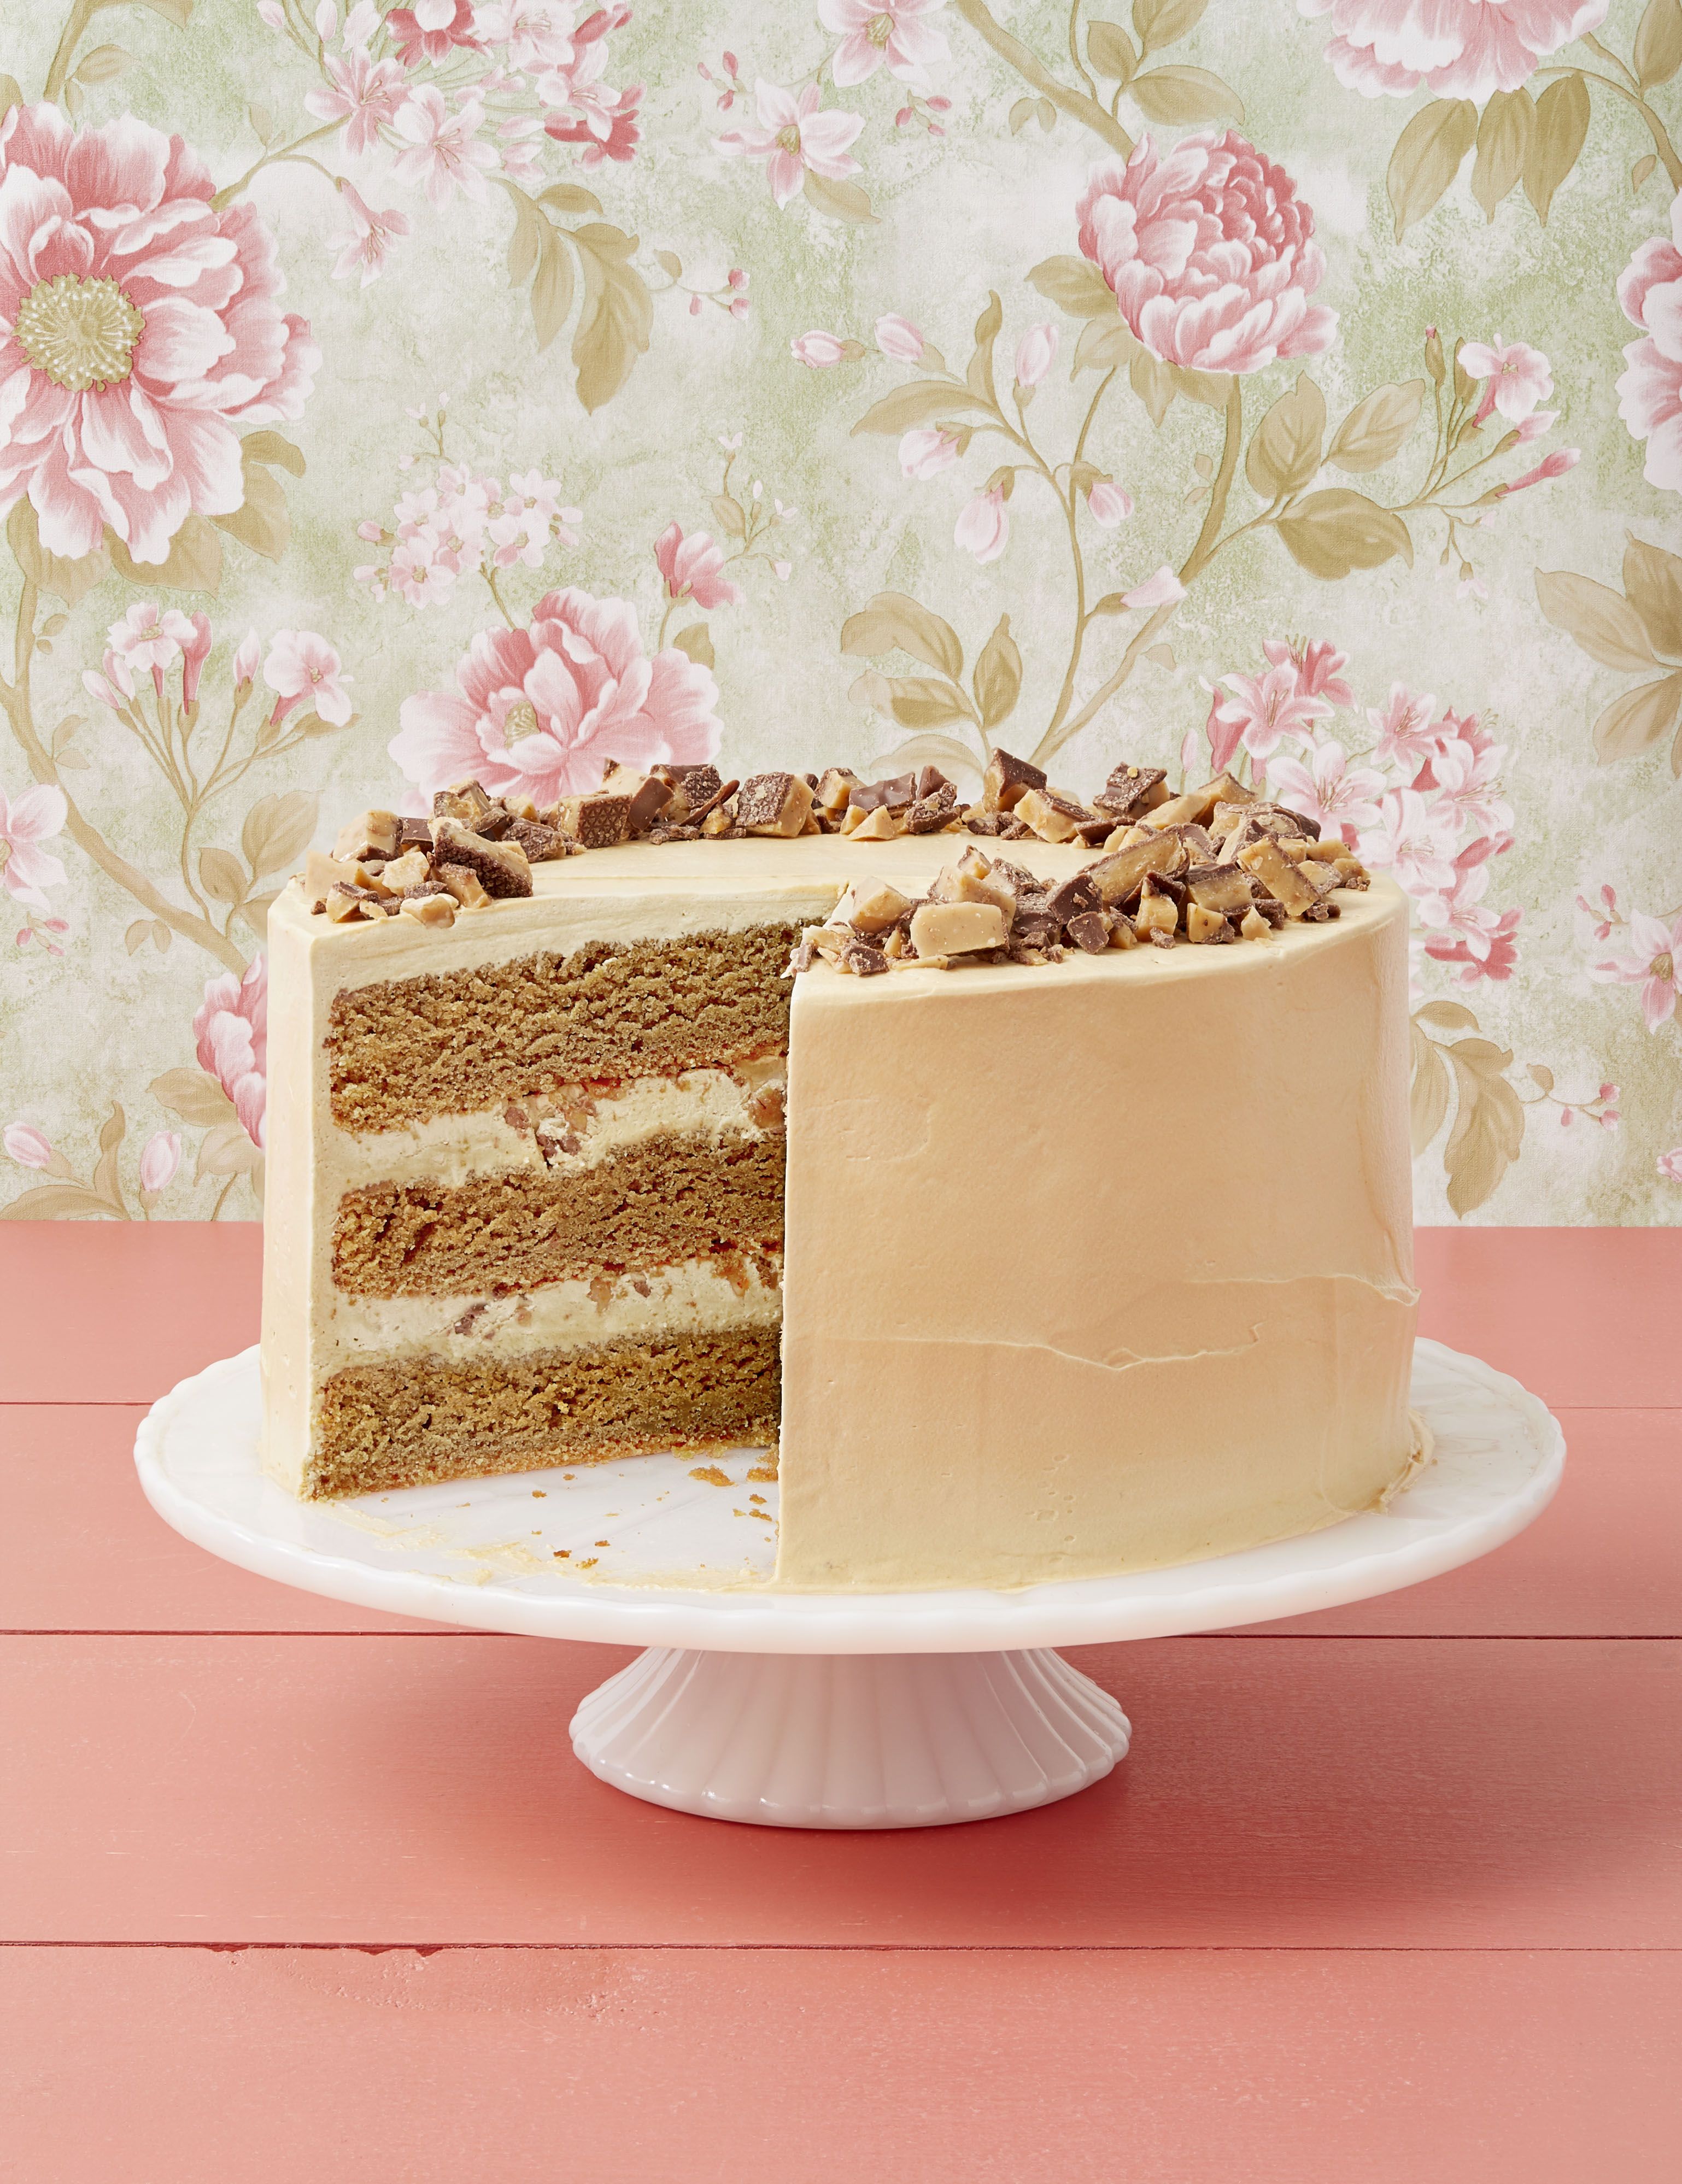 Date and walnut cake recipe - BBC Food